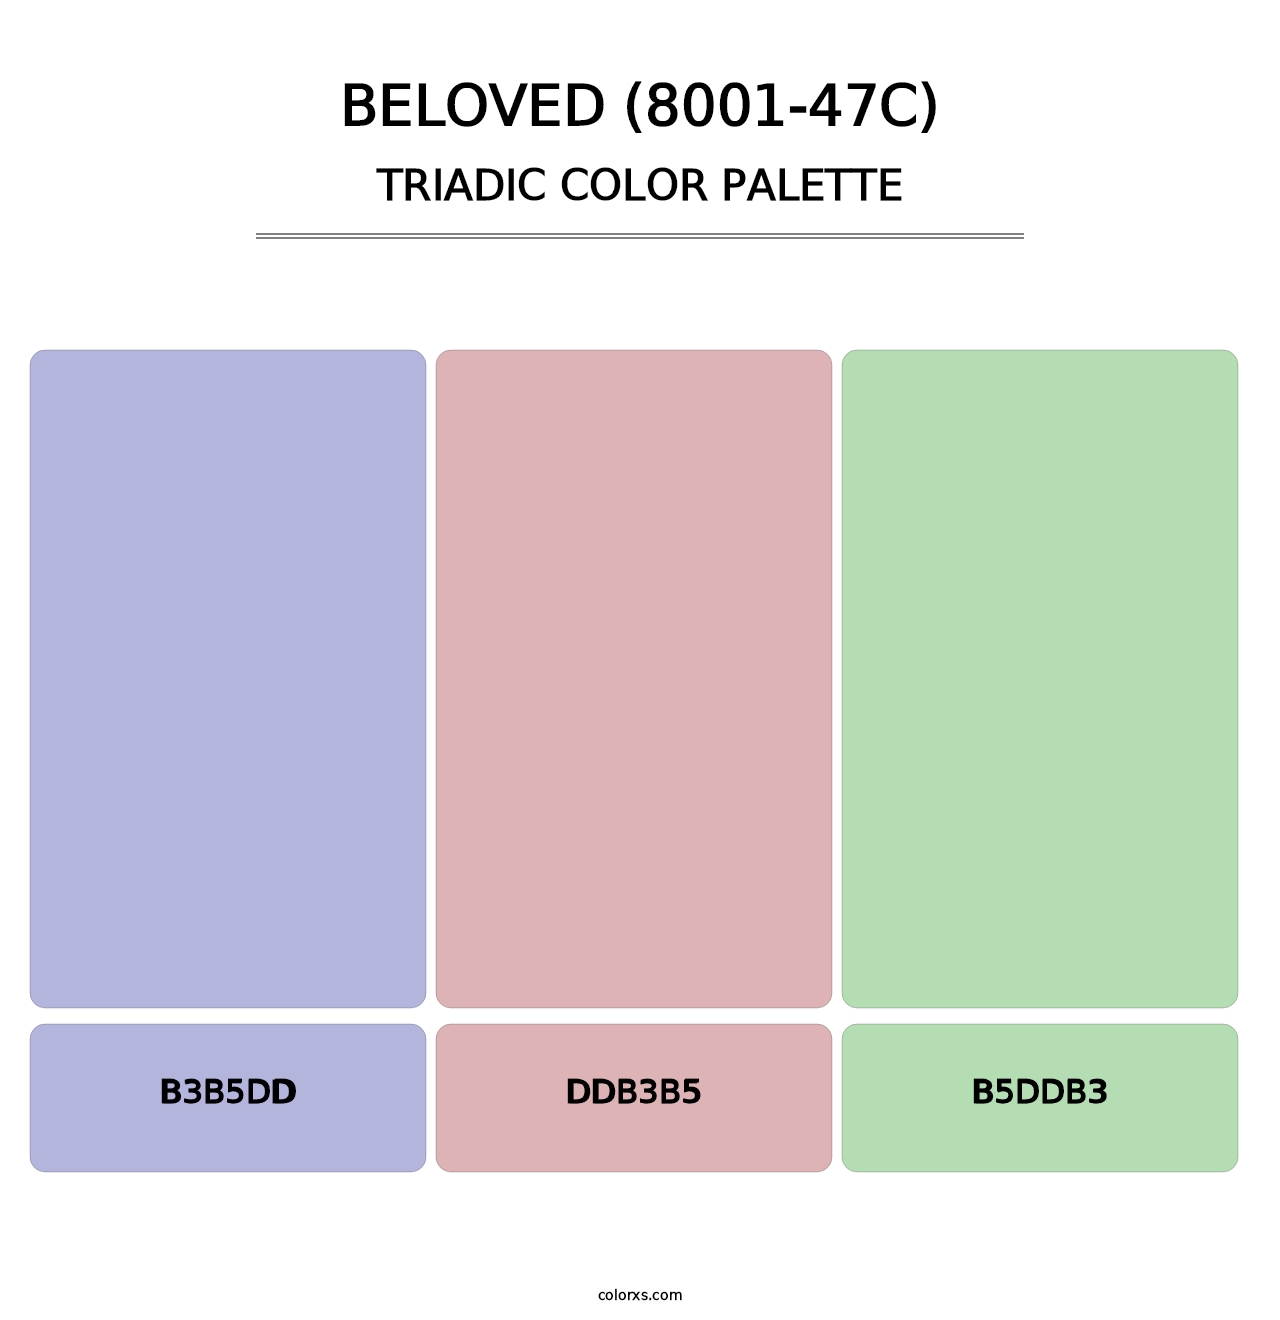 Beloved (8001-47C) - Triadic Color Palette